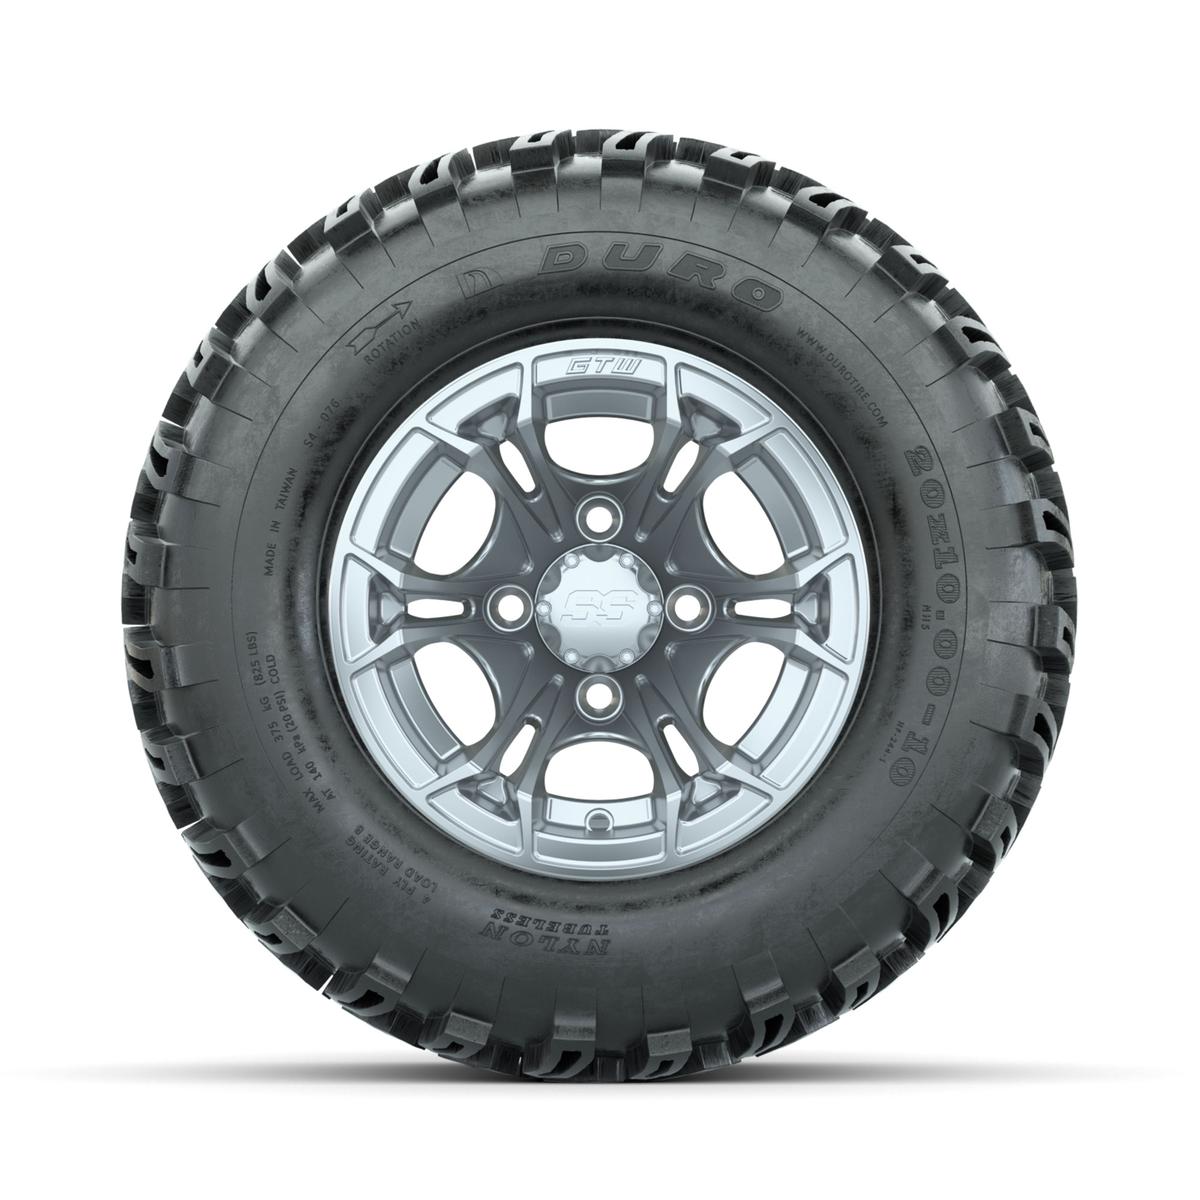 GTW Spyder Silver Brush 10 in Wheels with 20x10-10 Duro Desert All Terrain Tires – Full Set